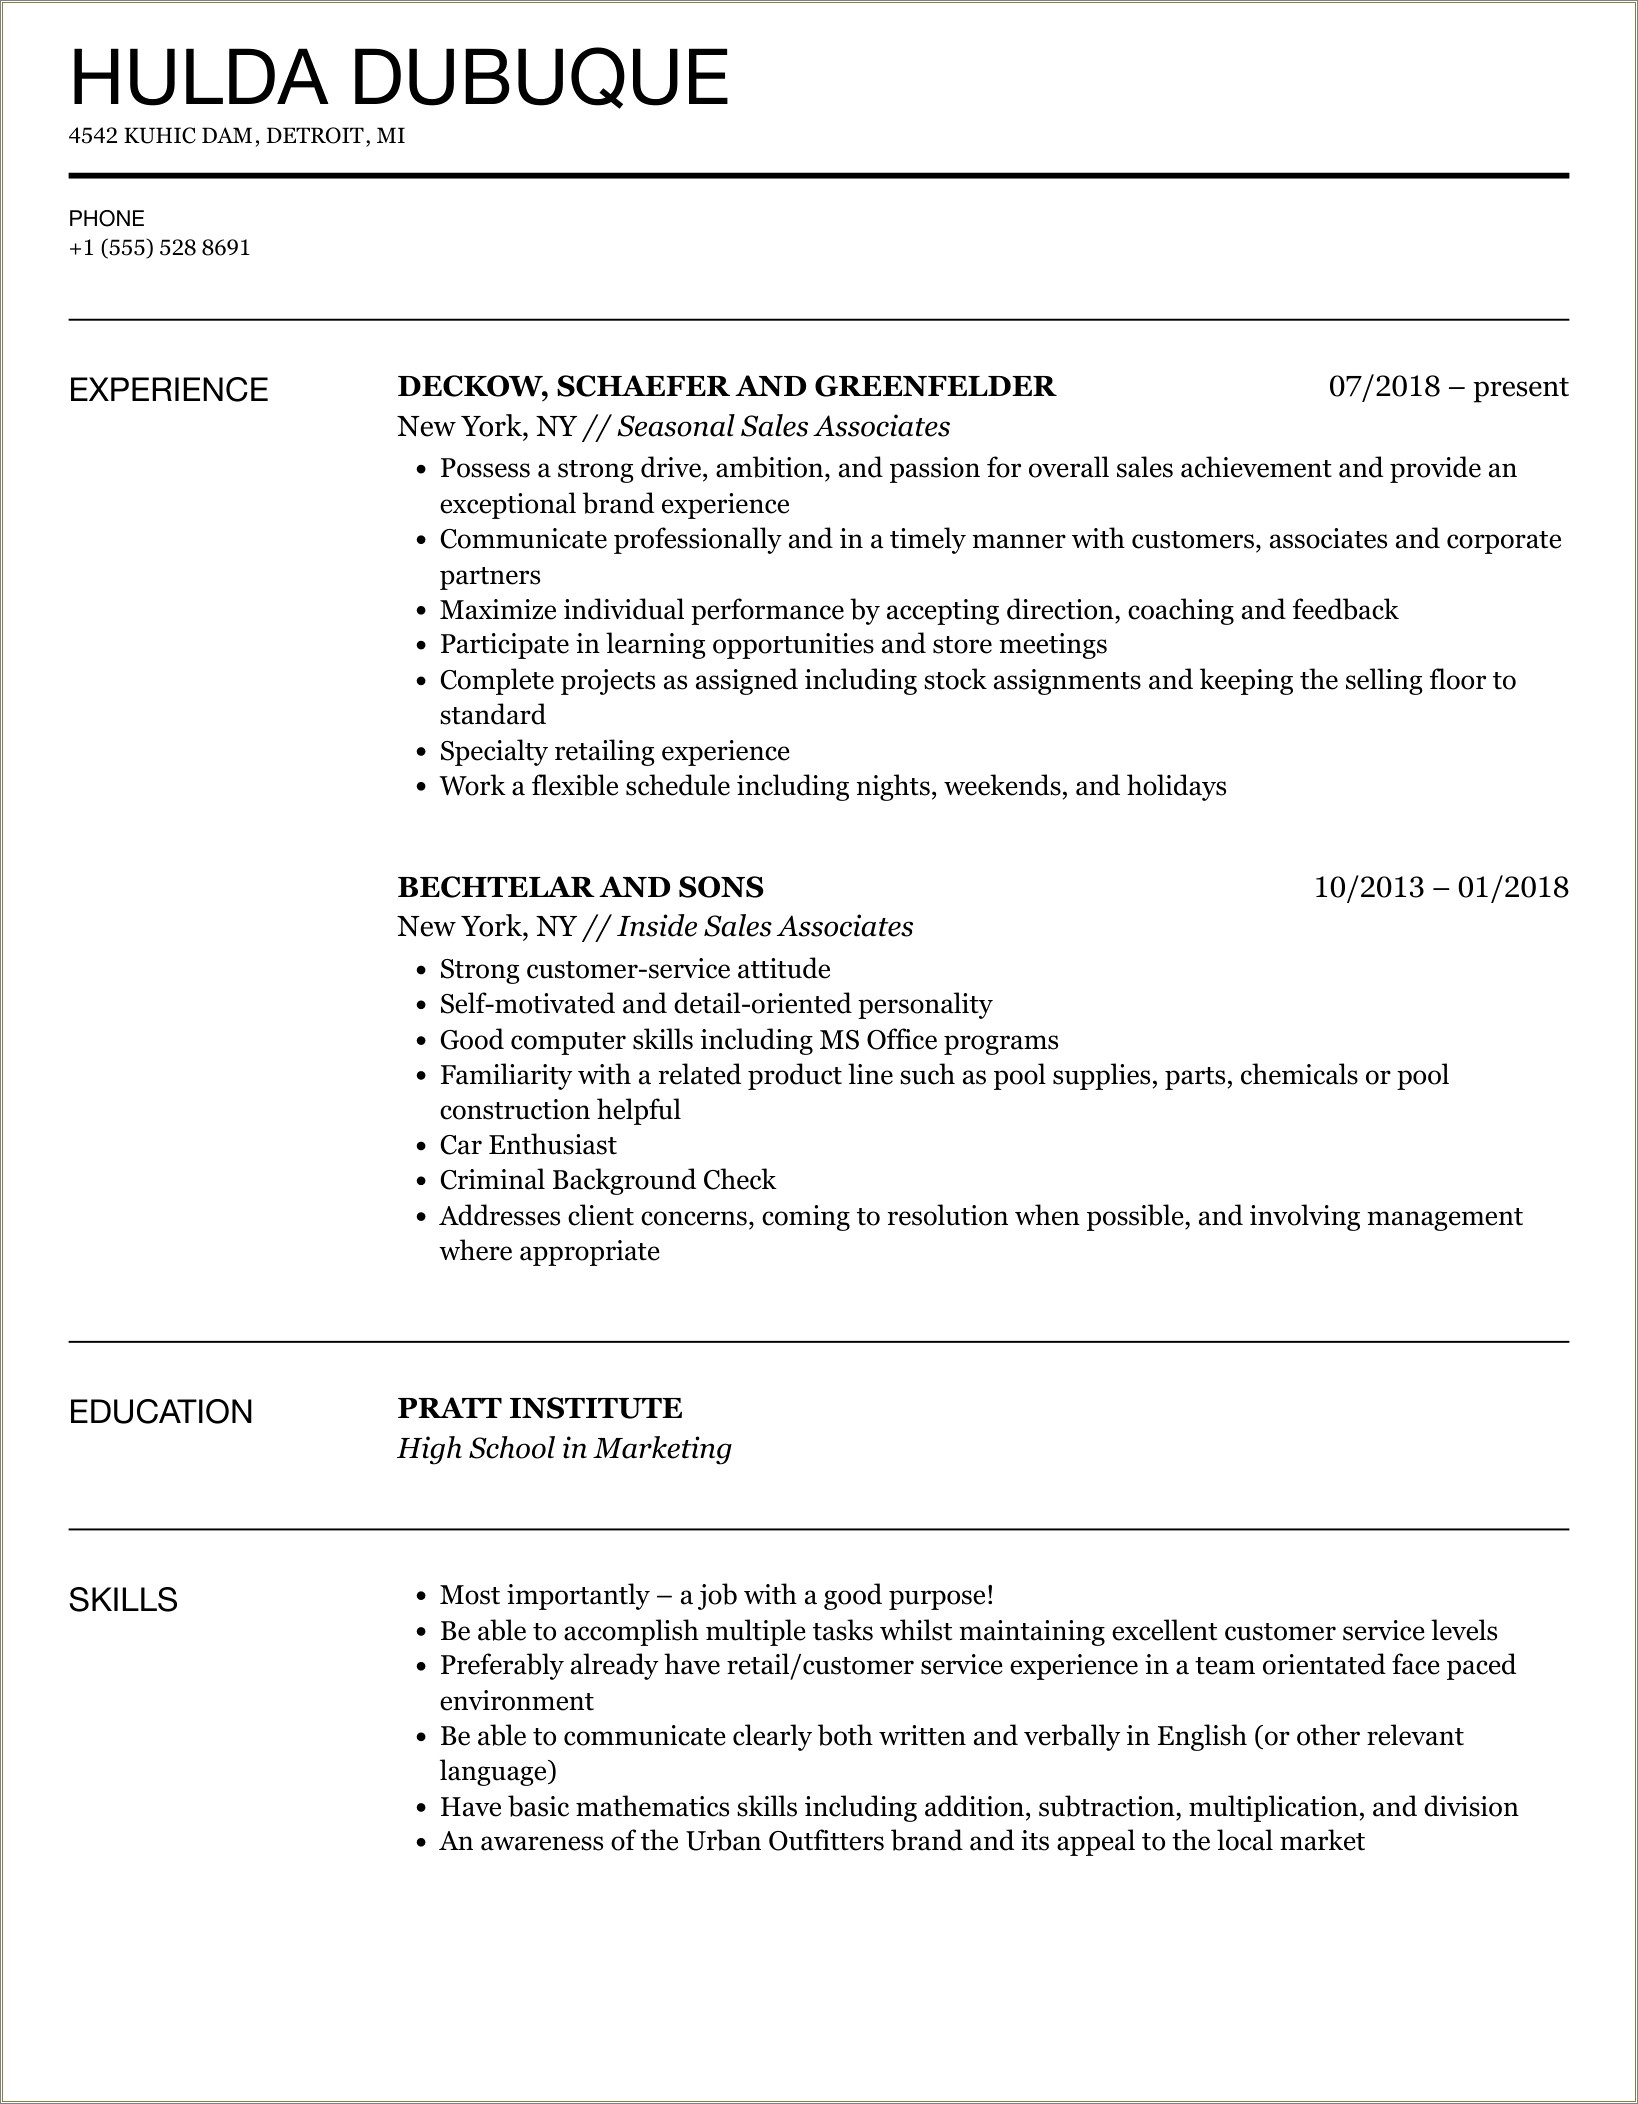 Job Description For Sales Associate On Resume